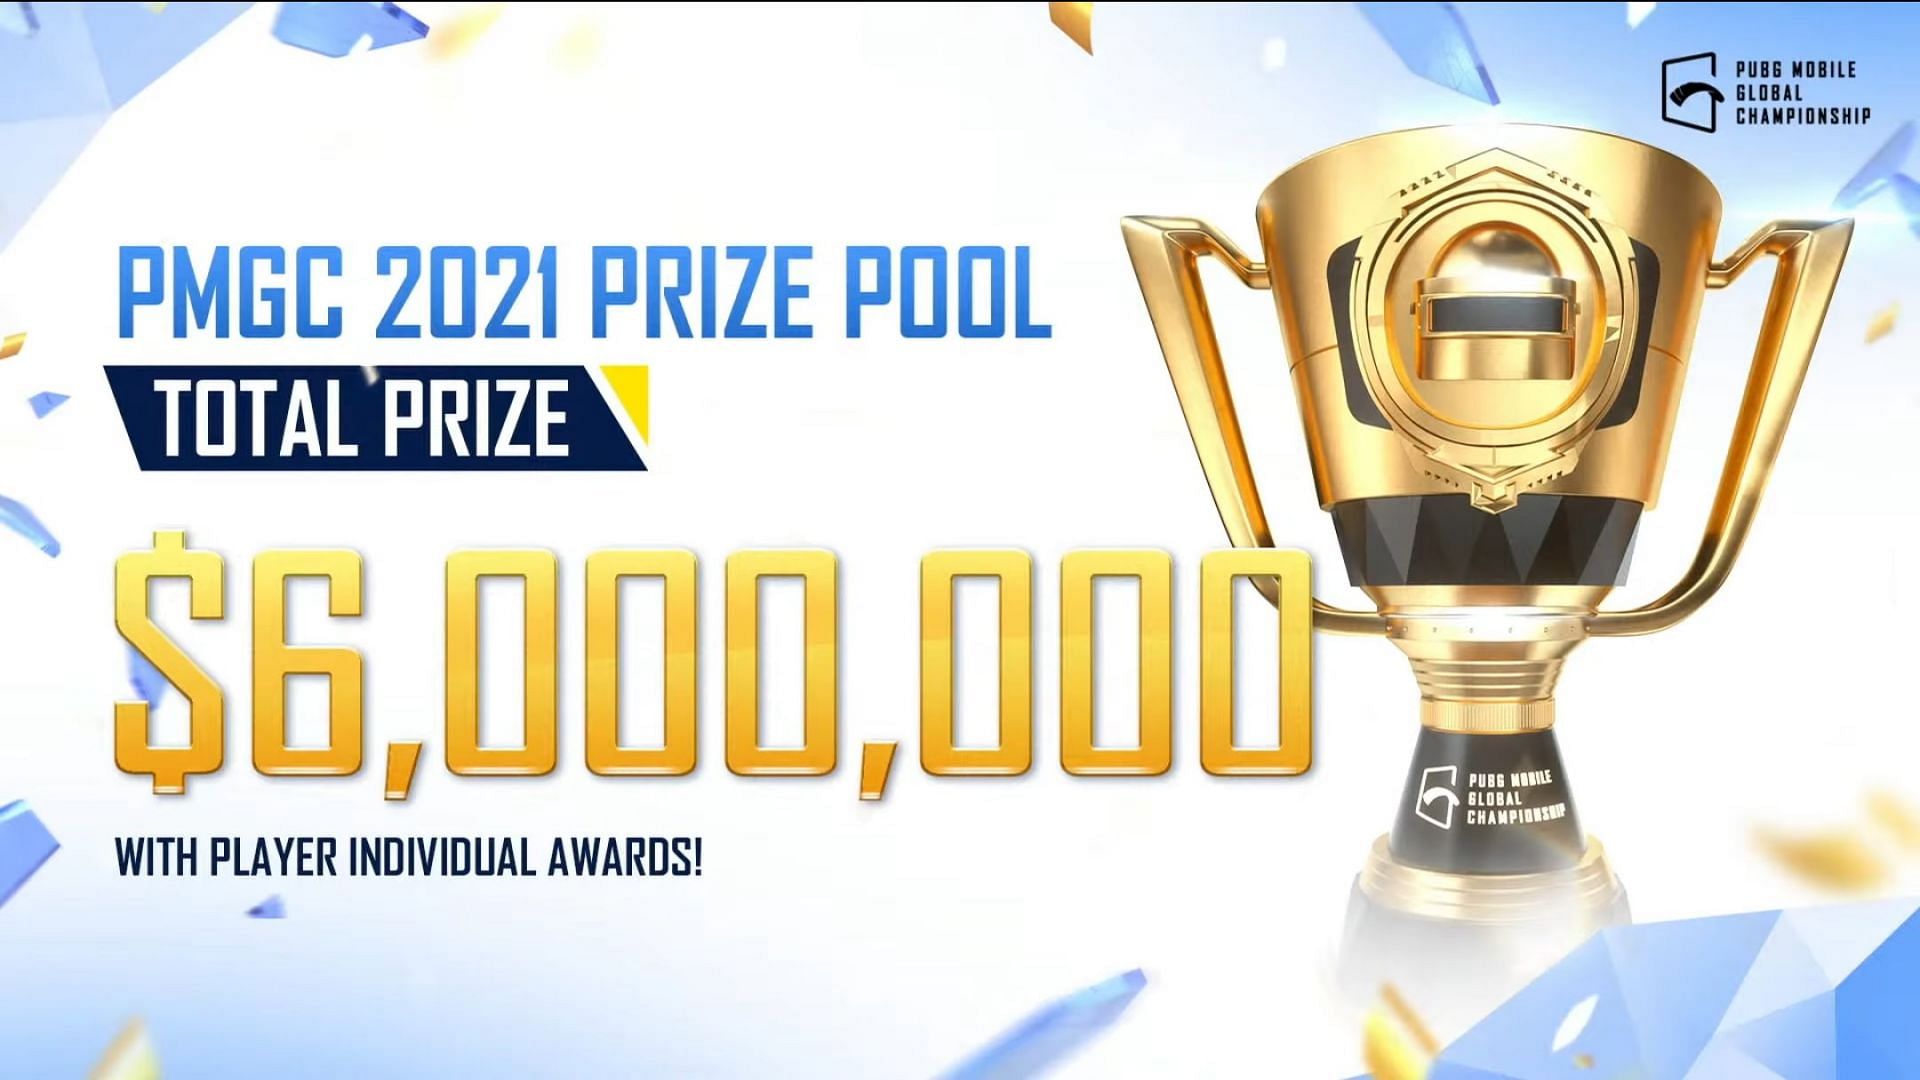 PMGC 2021 features a massive prize pool of 6 million USD (image via PUBG Mobile)